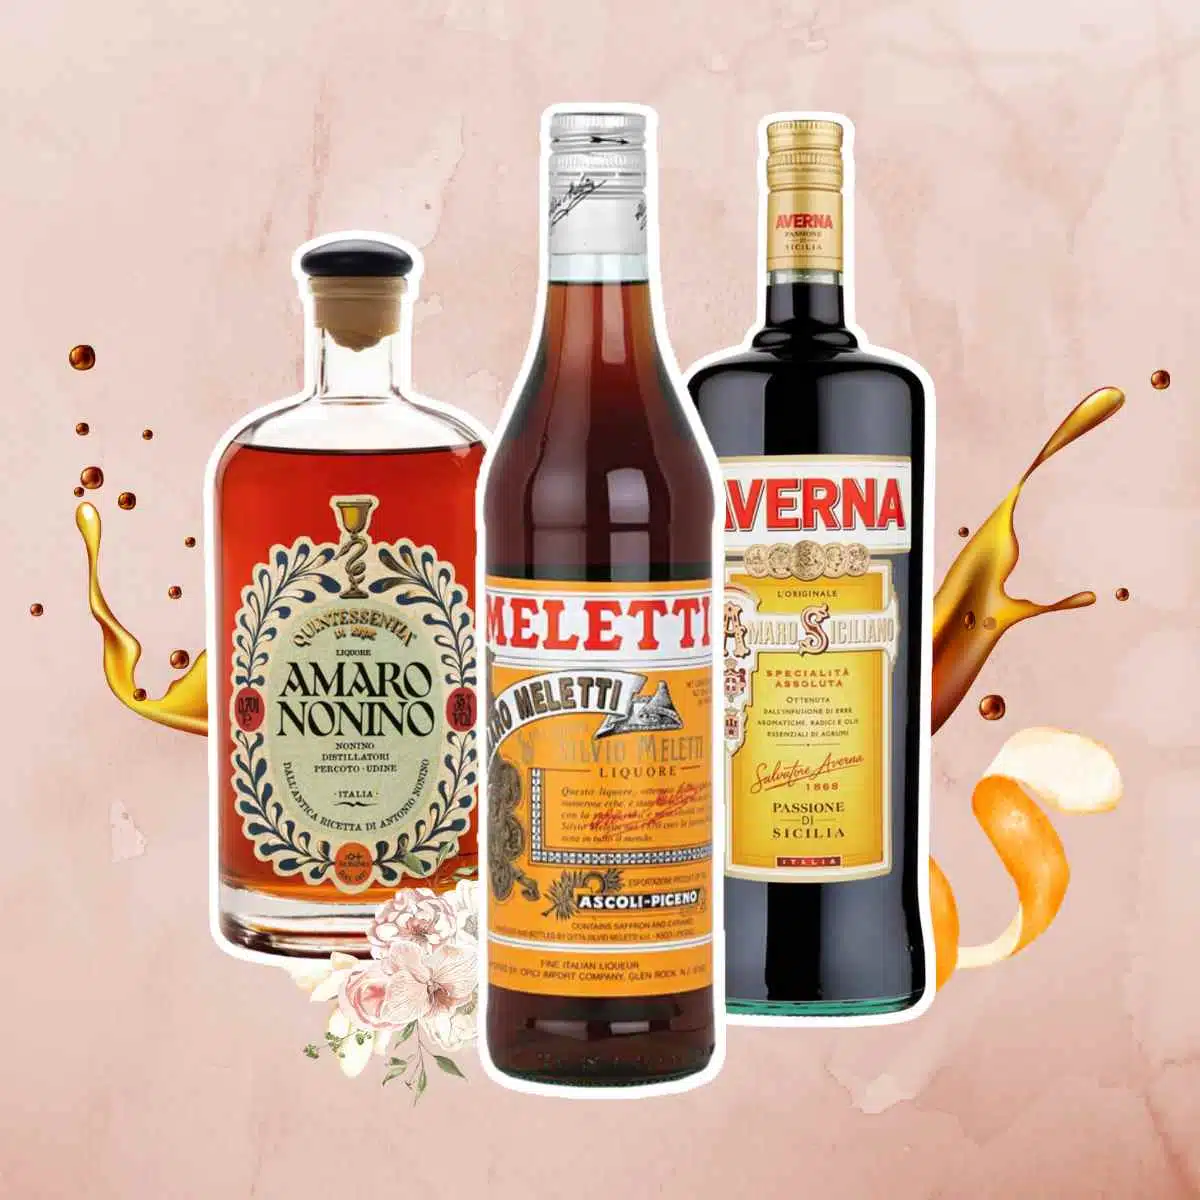 Best Amaro Montenegro substitutes bottles - Meletti, Nonino, and Averna